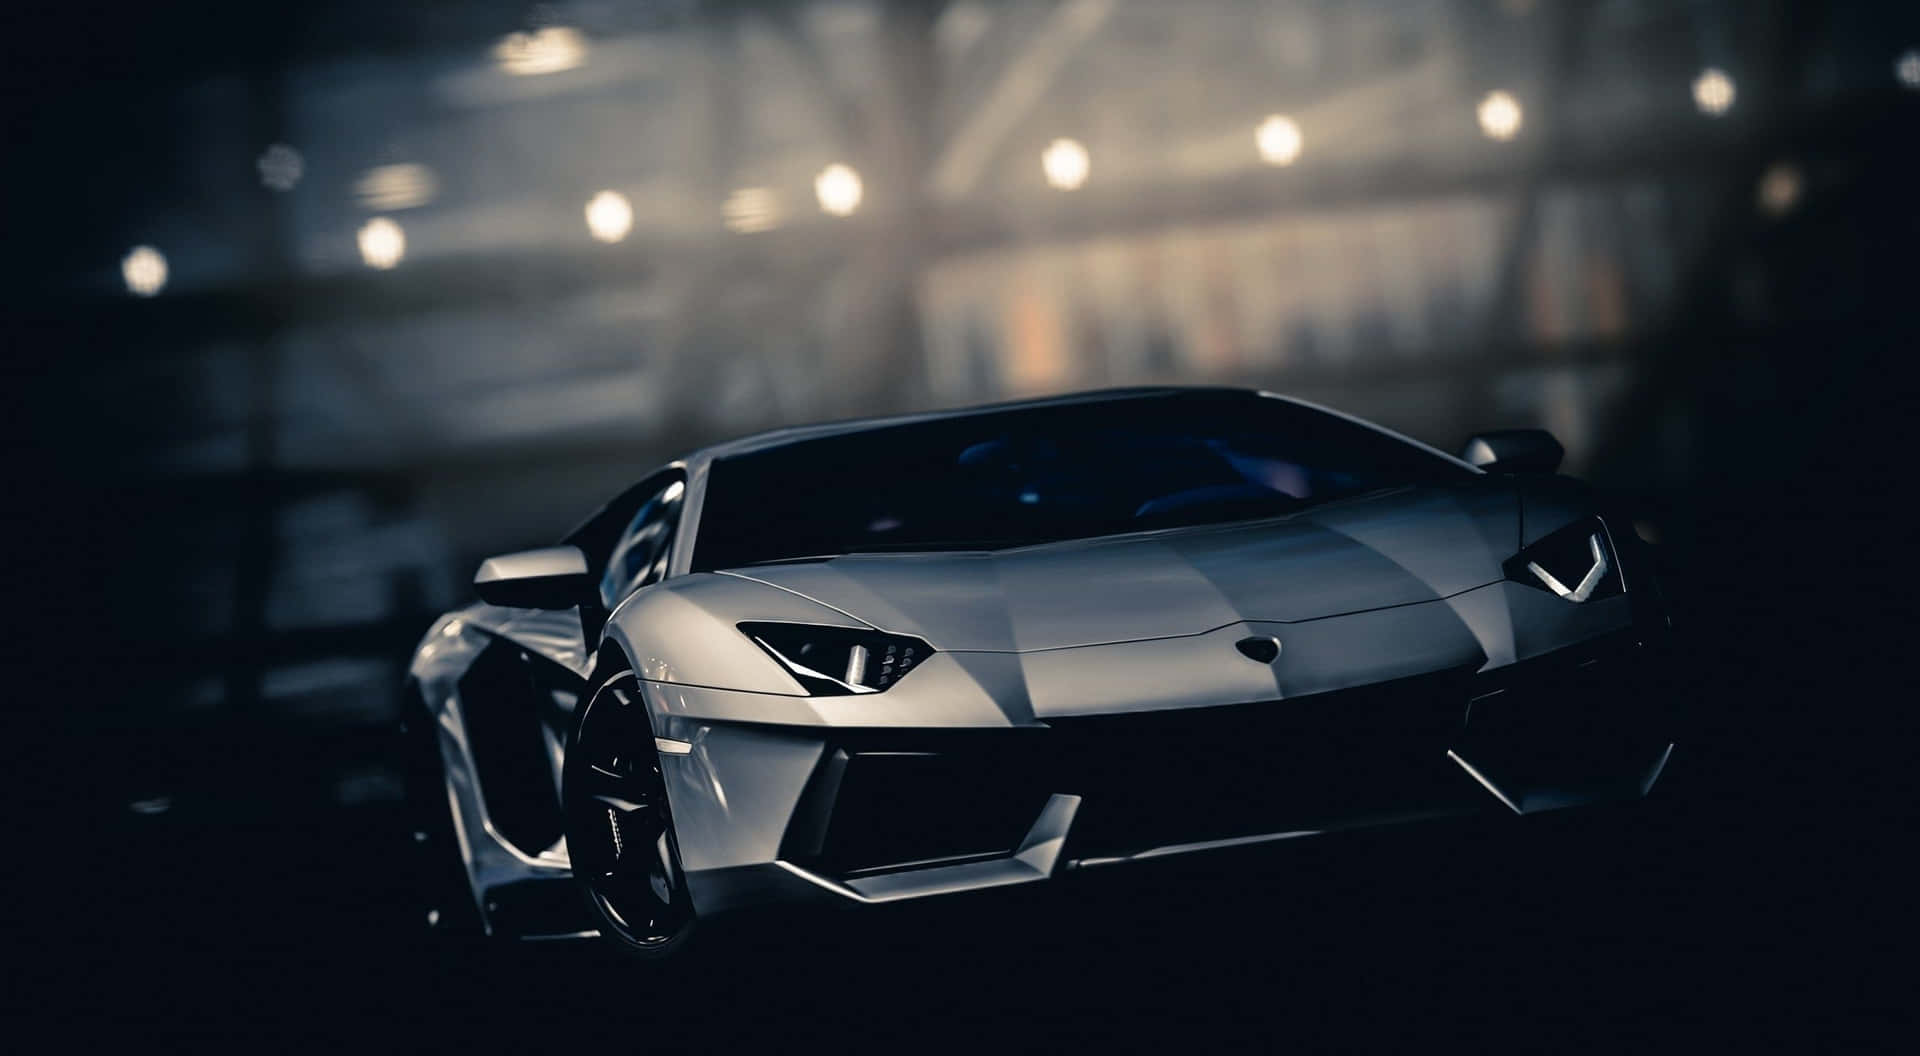 Take the Cool Lamborghini for a Spin Wallpaper